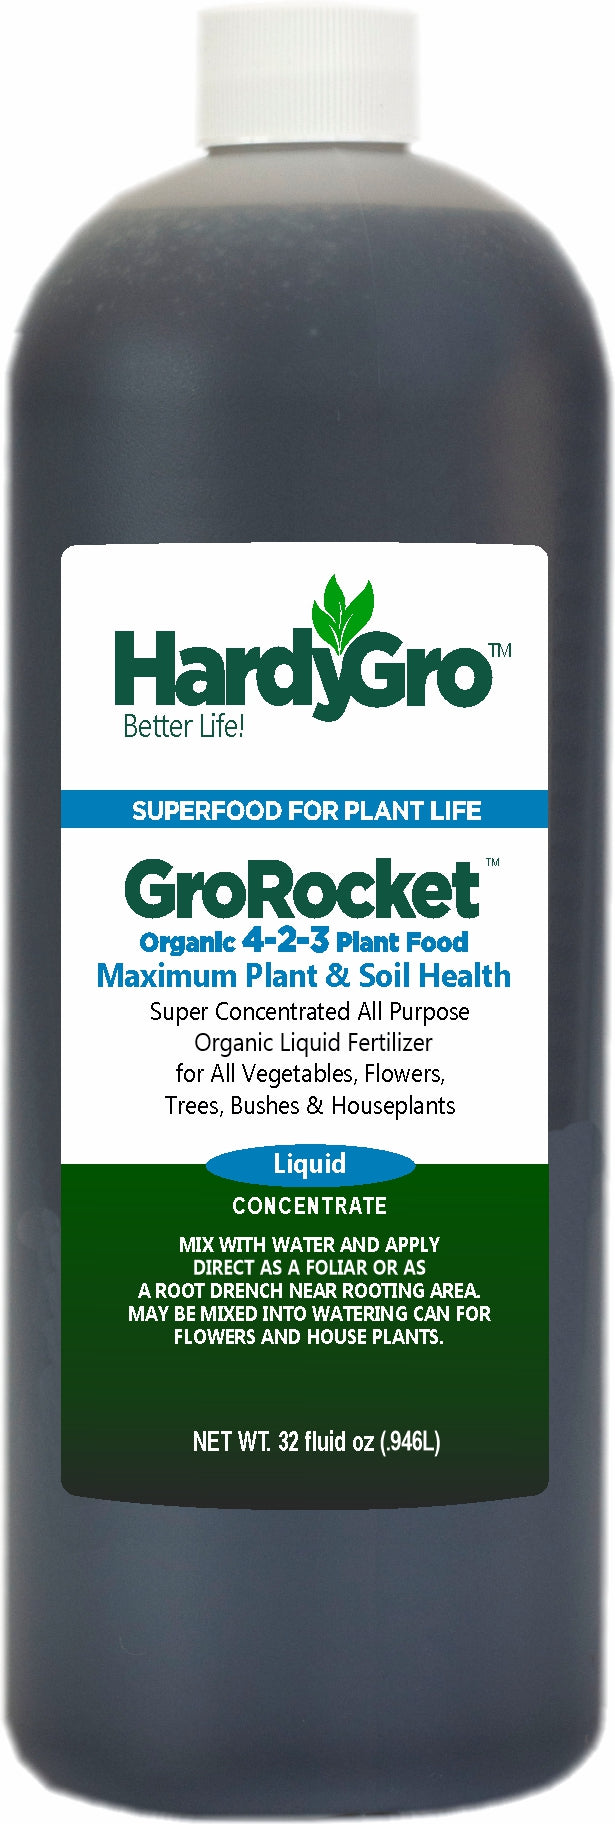 GroRocket organic plant food 4-2-3, 32oz + probiotics